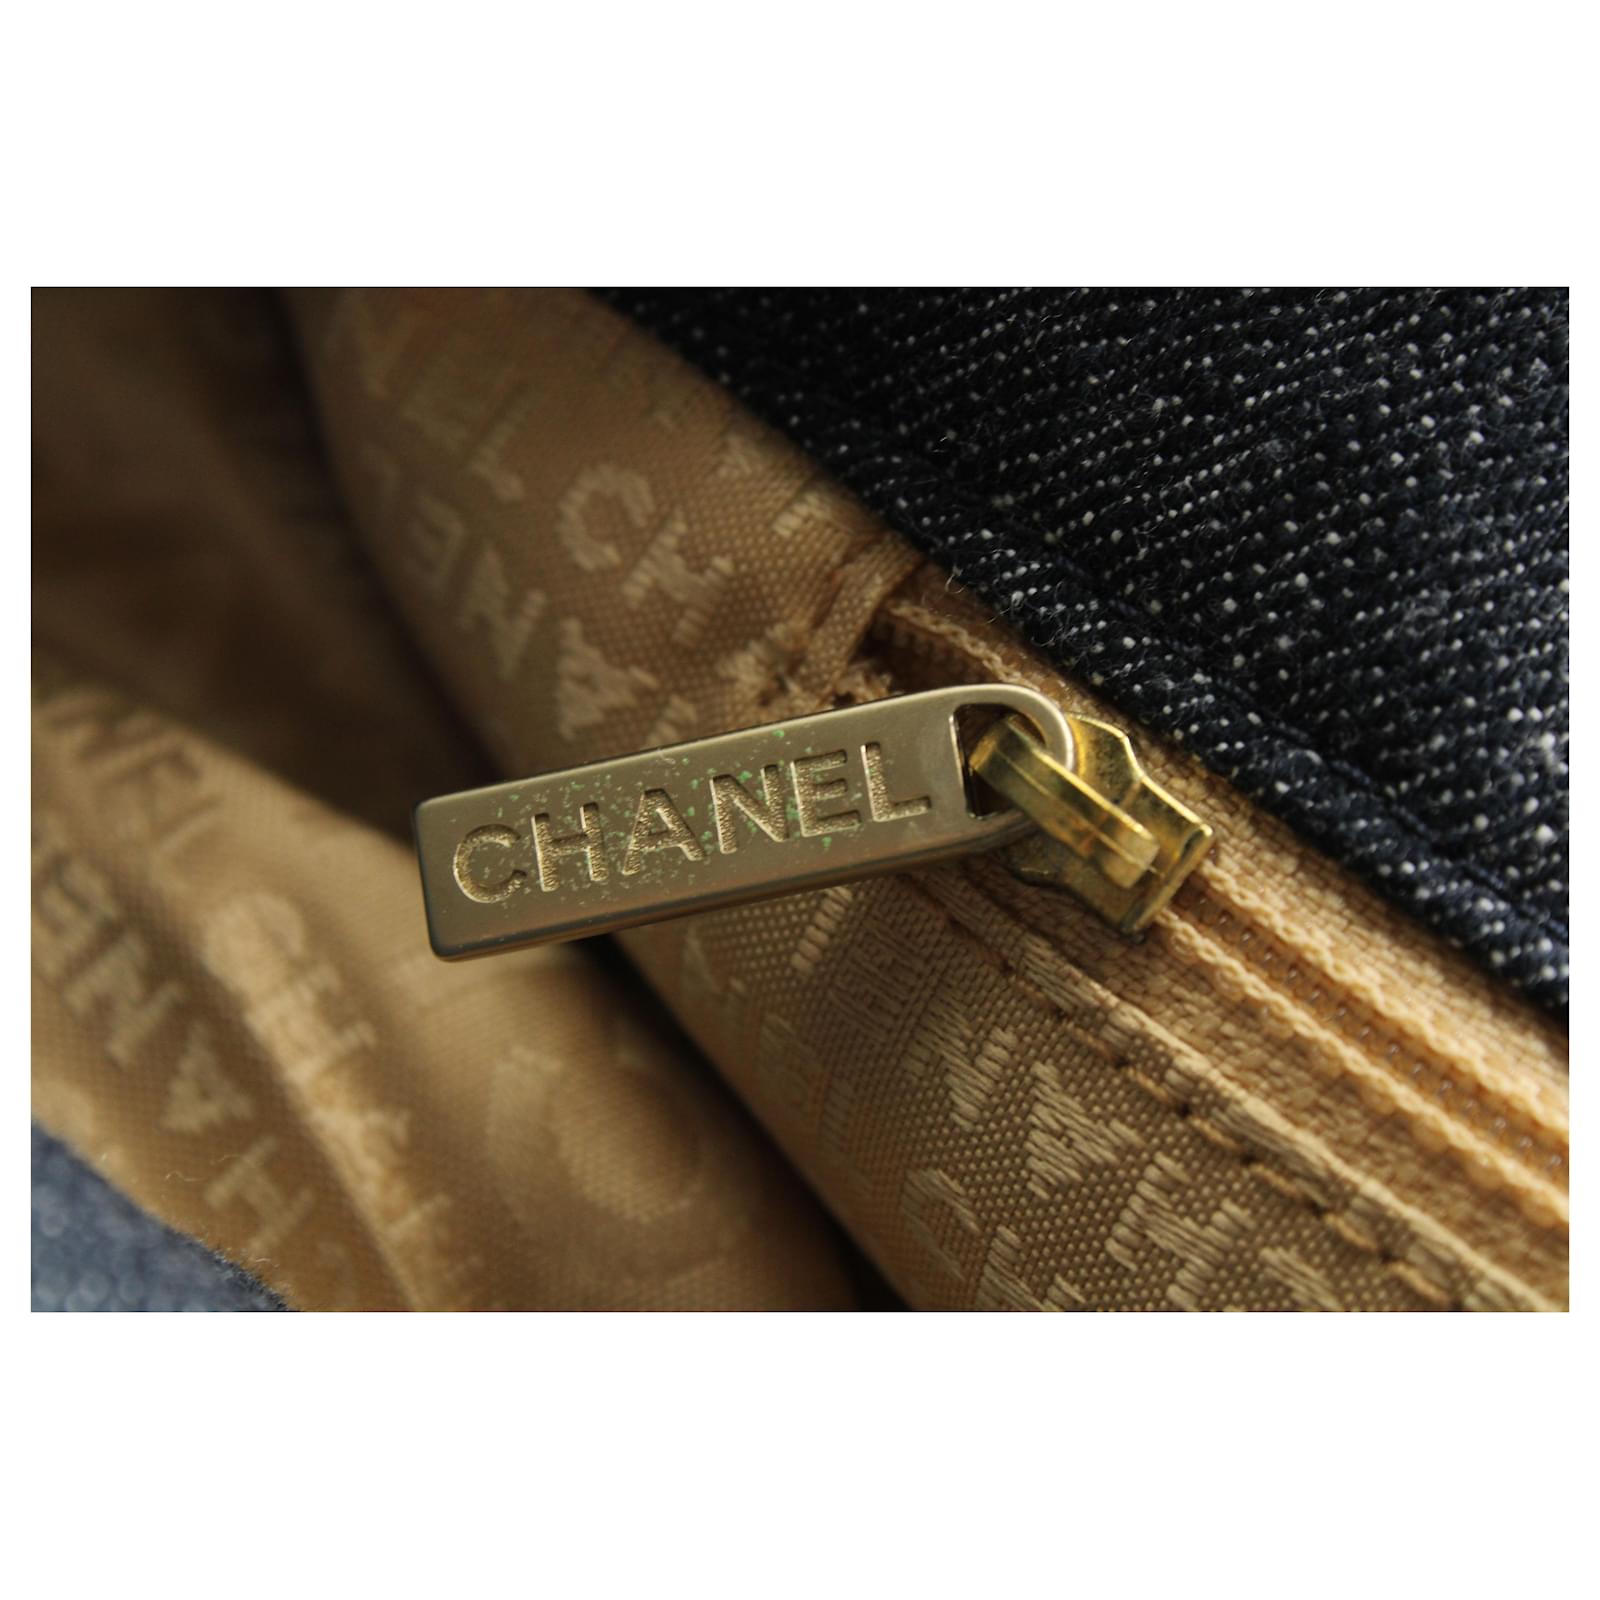 Chanel Coco Cabas Tote Bag in Blue Denim